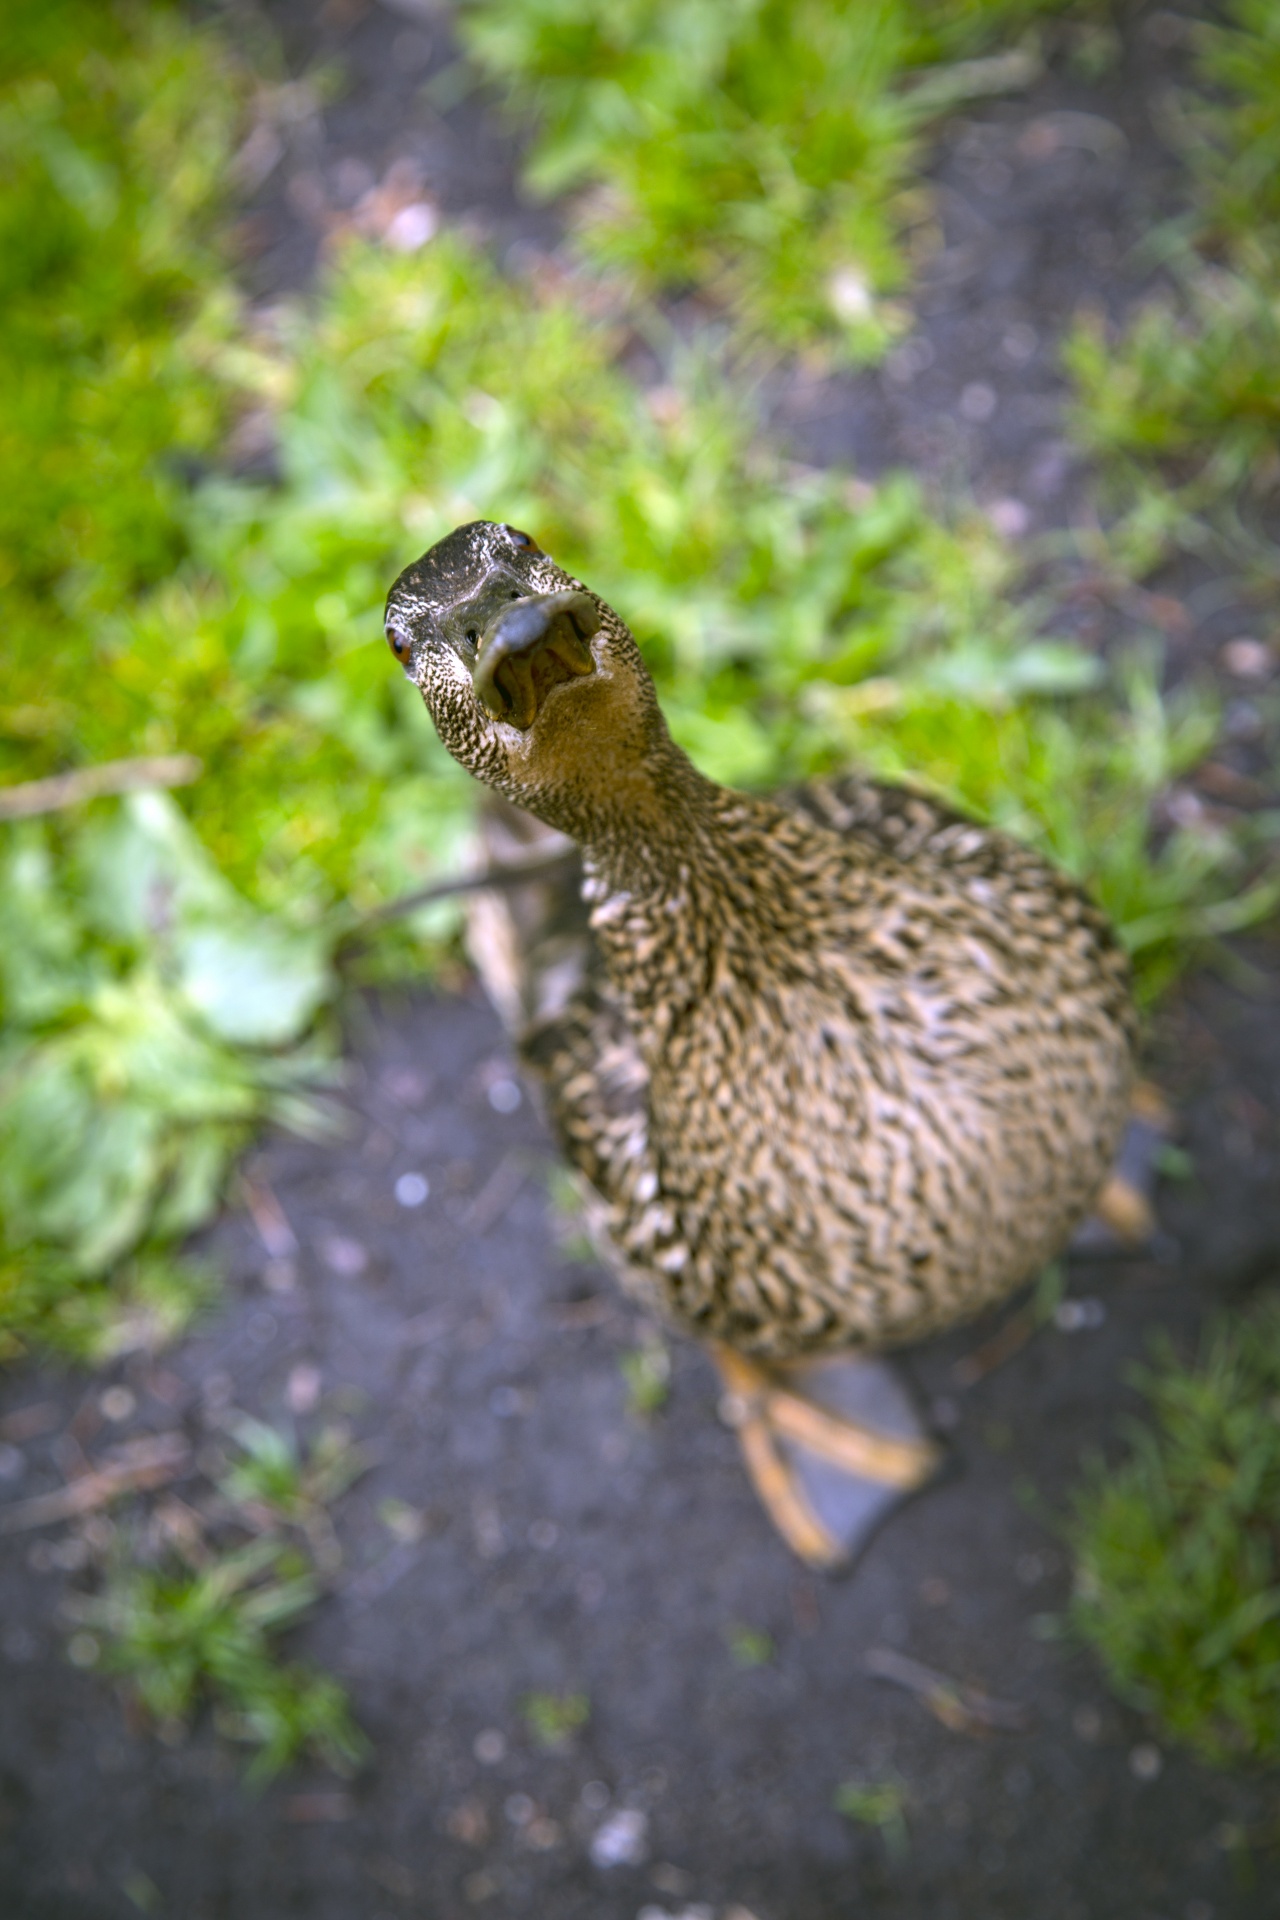 Download free photo of Green,grass,domestic,ducks,vertebrate animals - from needpix.com